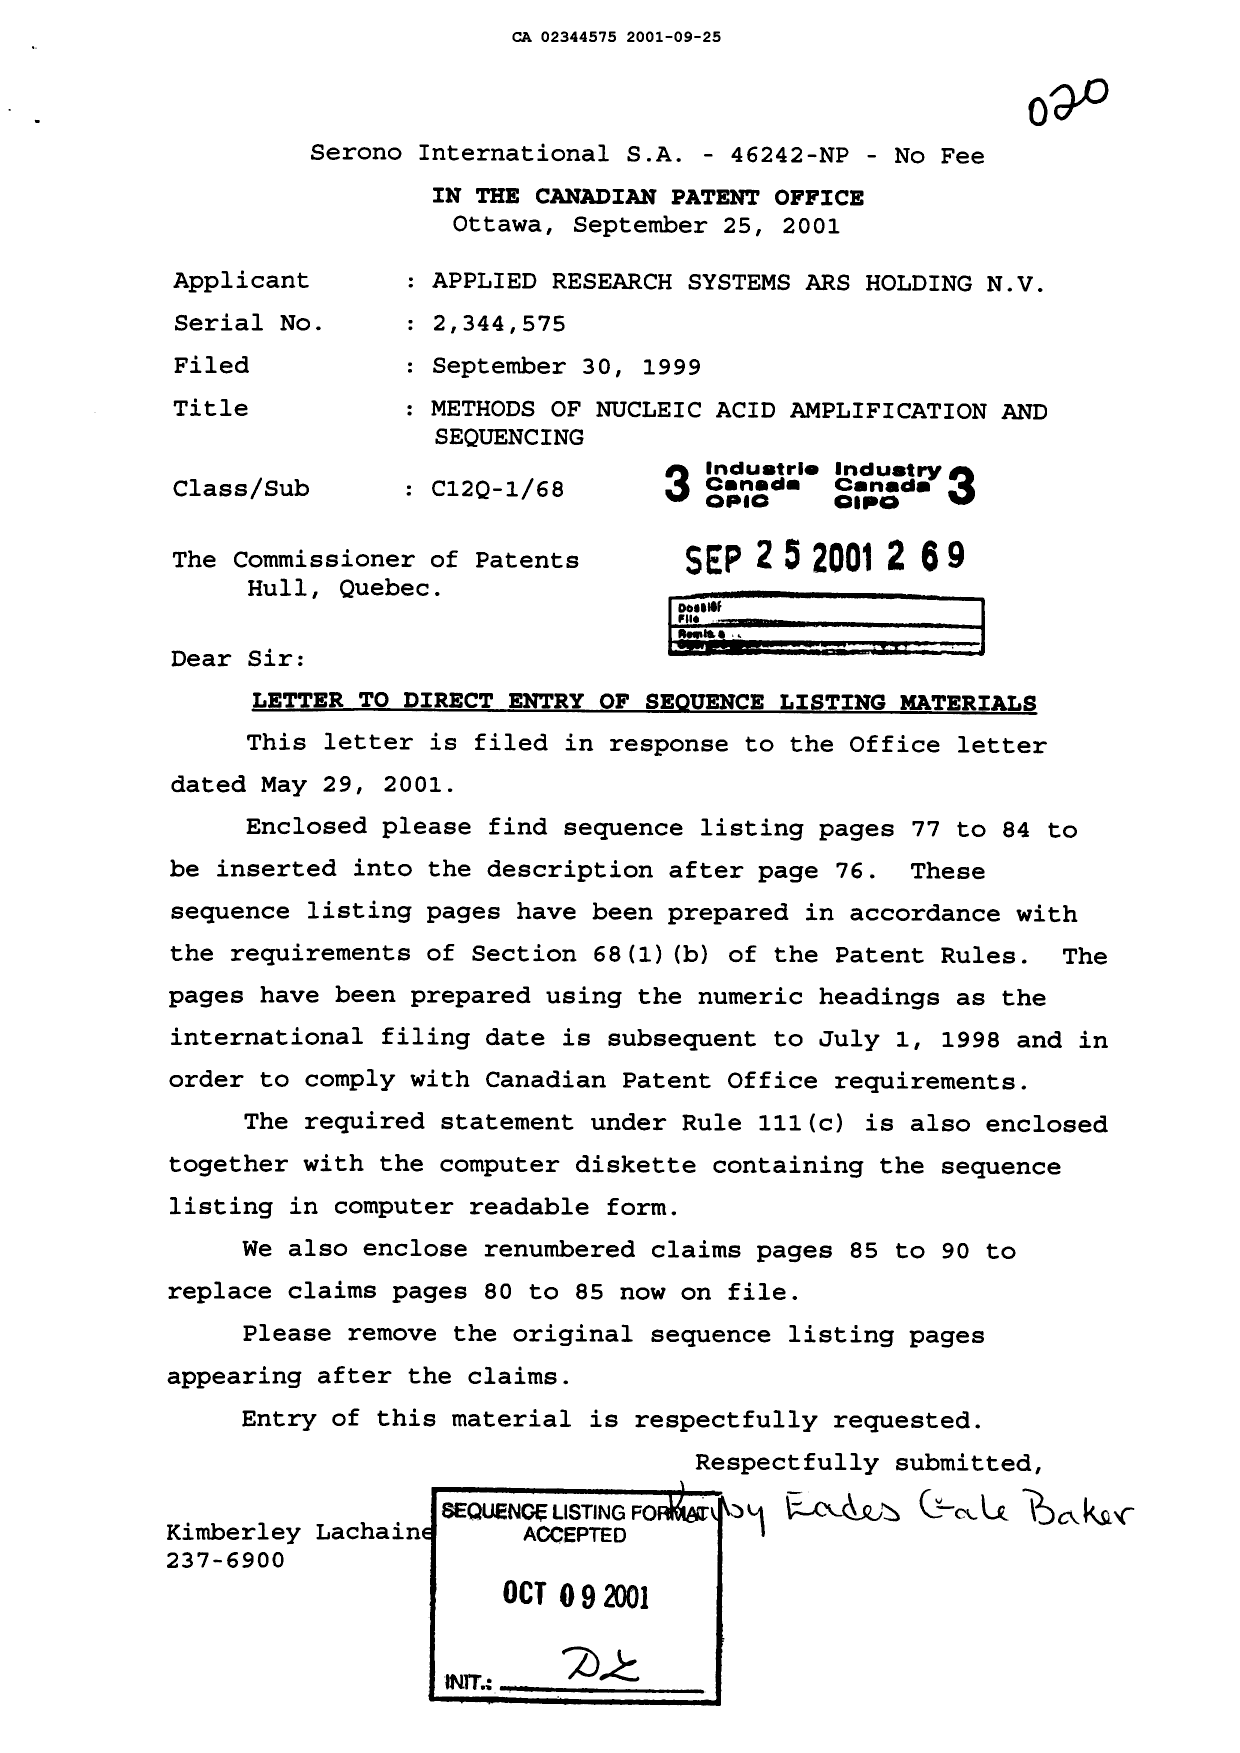 Canadian Patent Document 2344575. Correspondence 20010925. Image 1 of 16